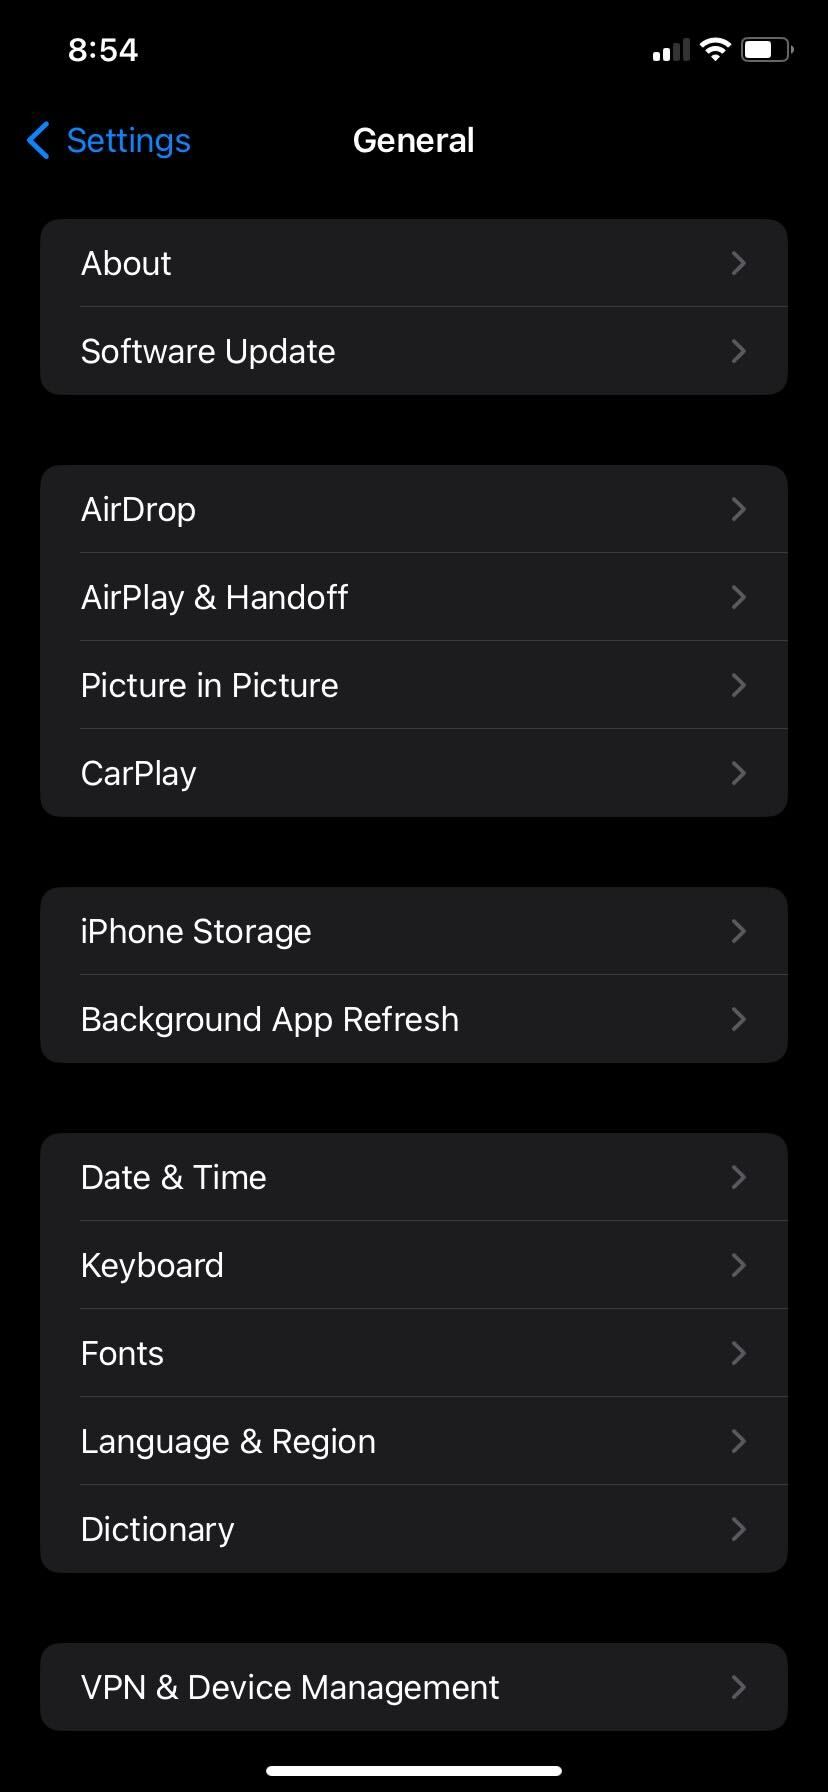 iPhone Storage settings